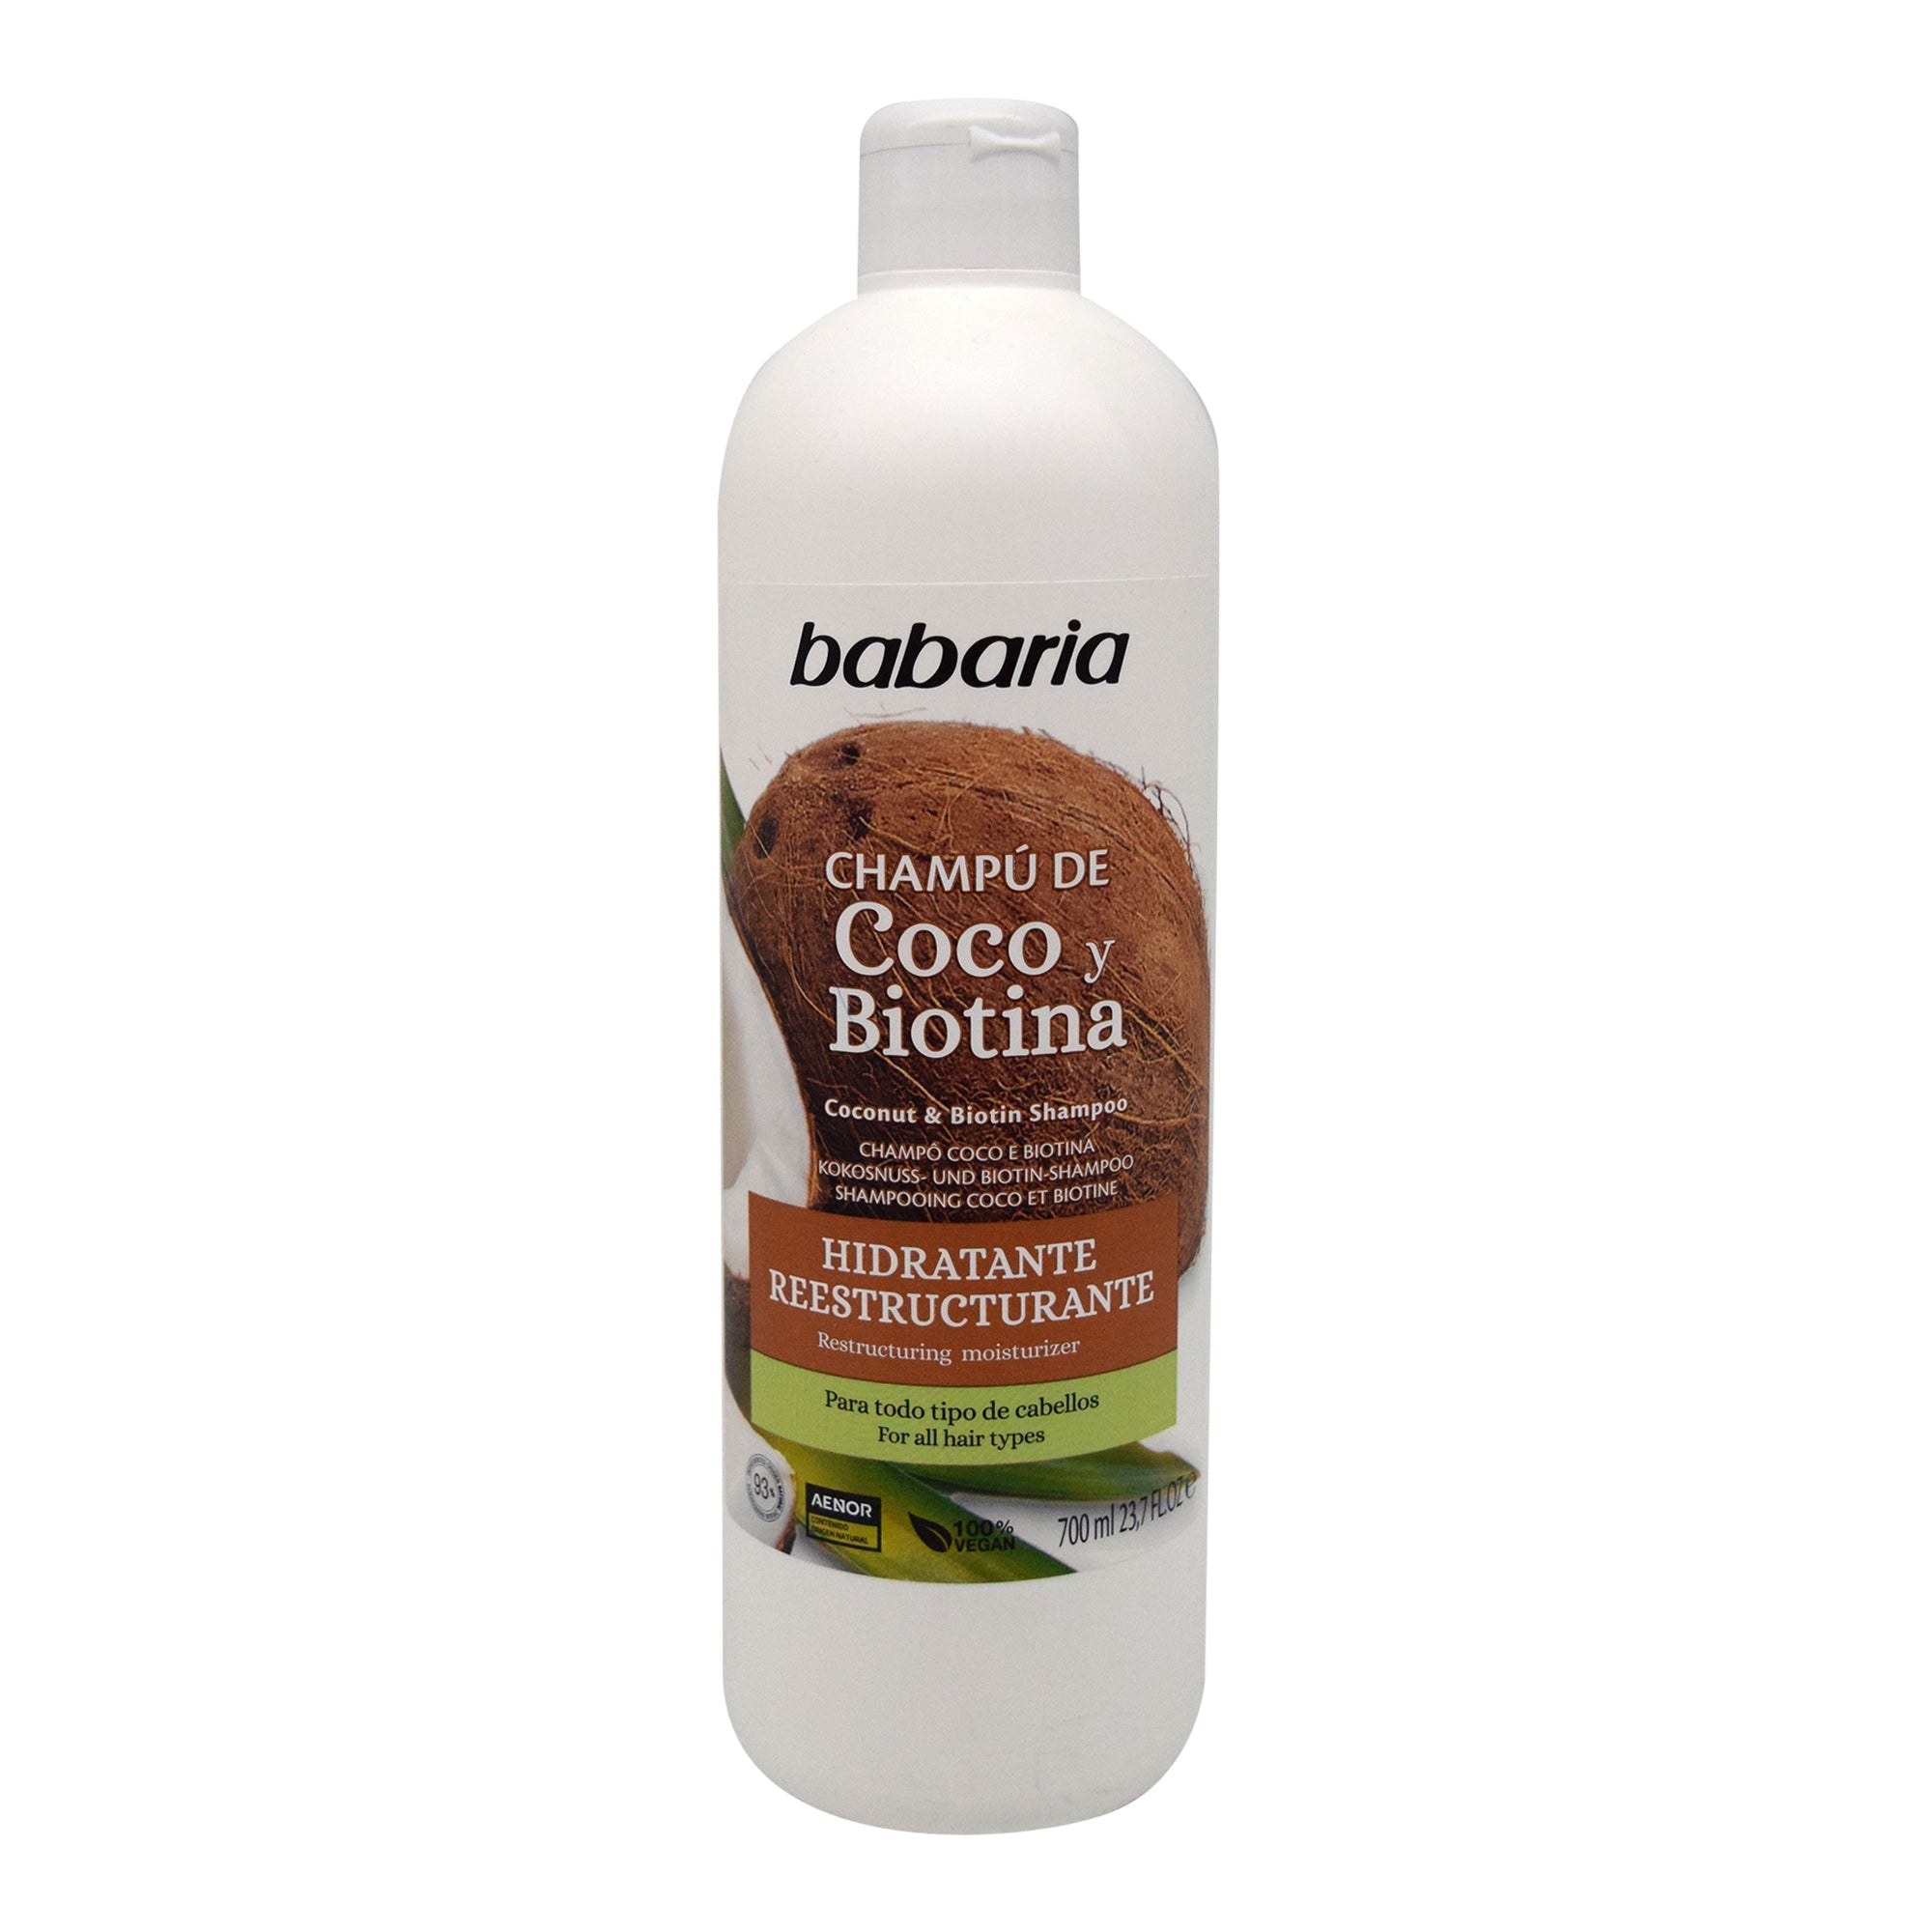 Shampoo coco y biotina 700 ml